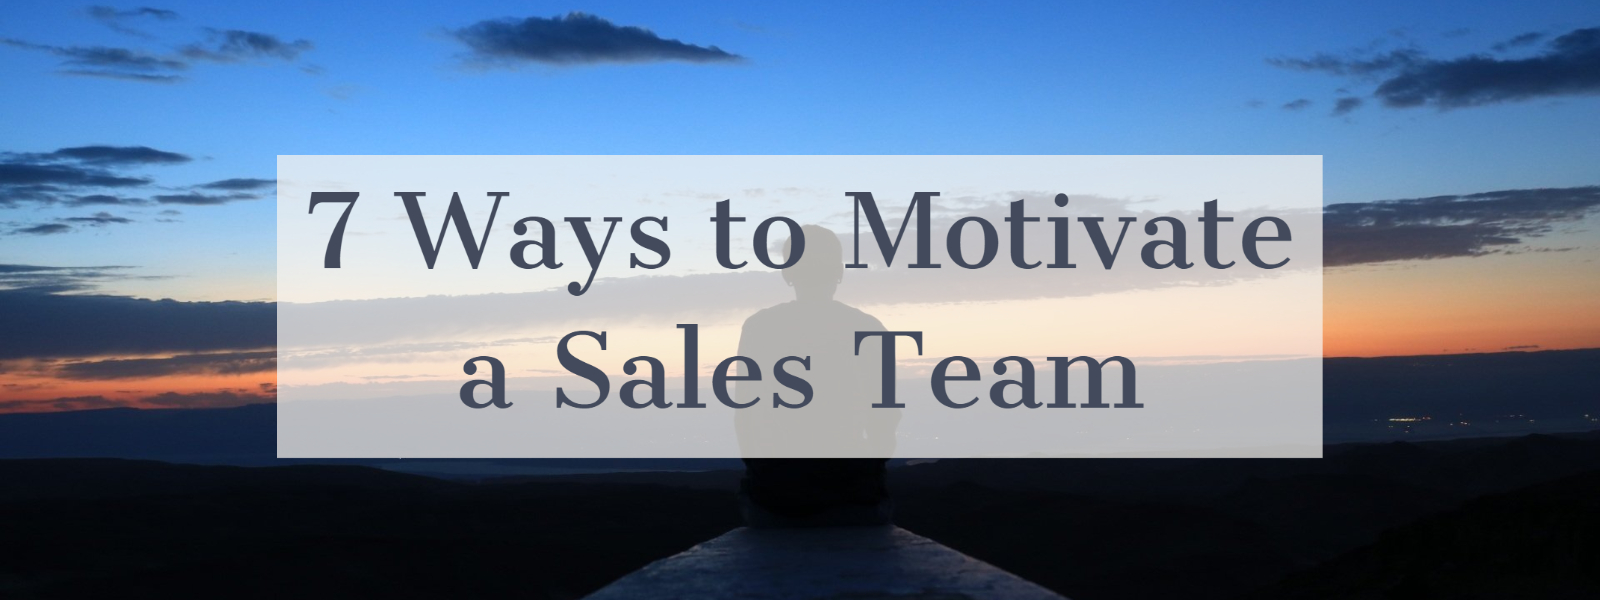 7 Ways to Motivate a Sales Team